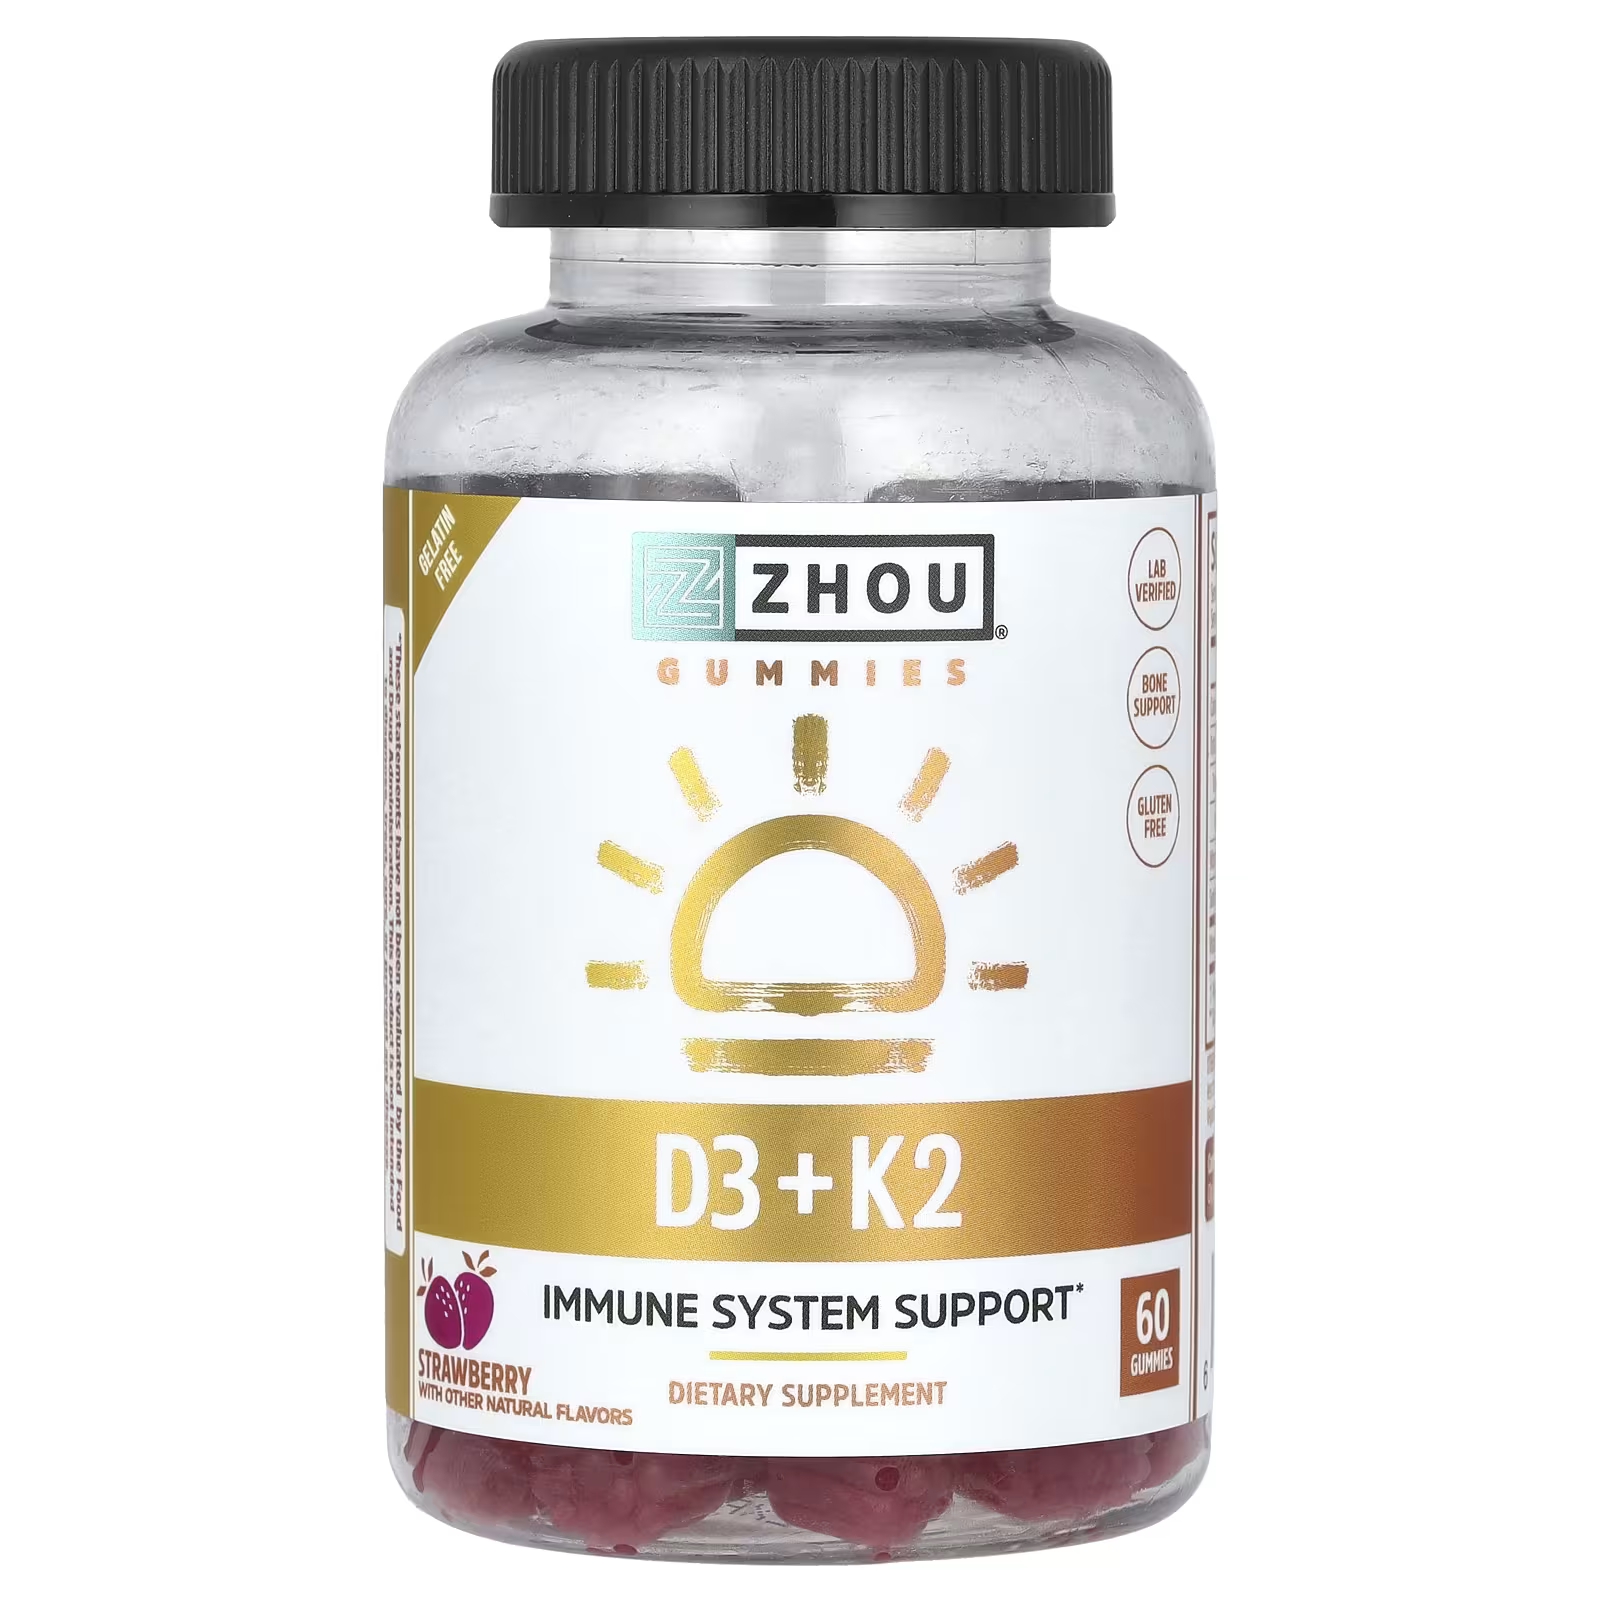 Пищевая добавка Zhou Nutrition D3 + K2 с клубникой, 60 жевательных конфет пищевая добавка zhou nutrition superfruits max watermelon 60 жевательных конфет